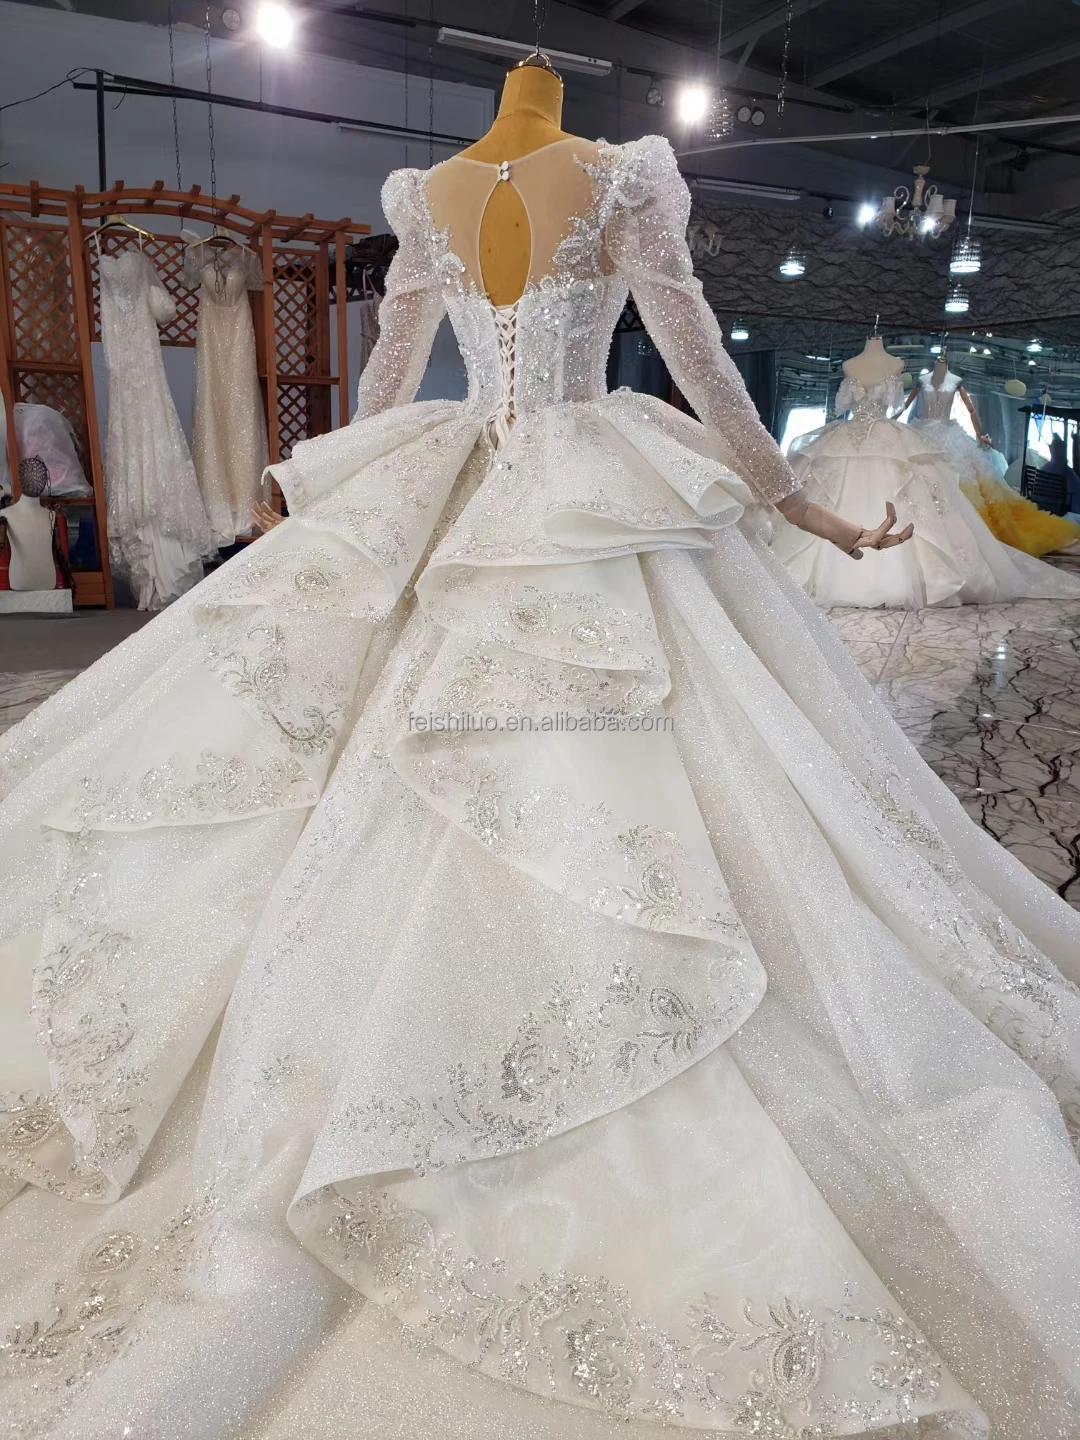 wedding dress bridal gowns luxurious super| Alibaba.com